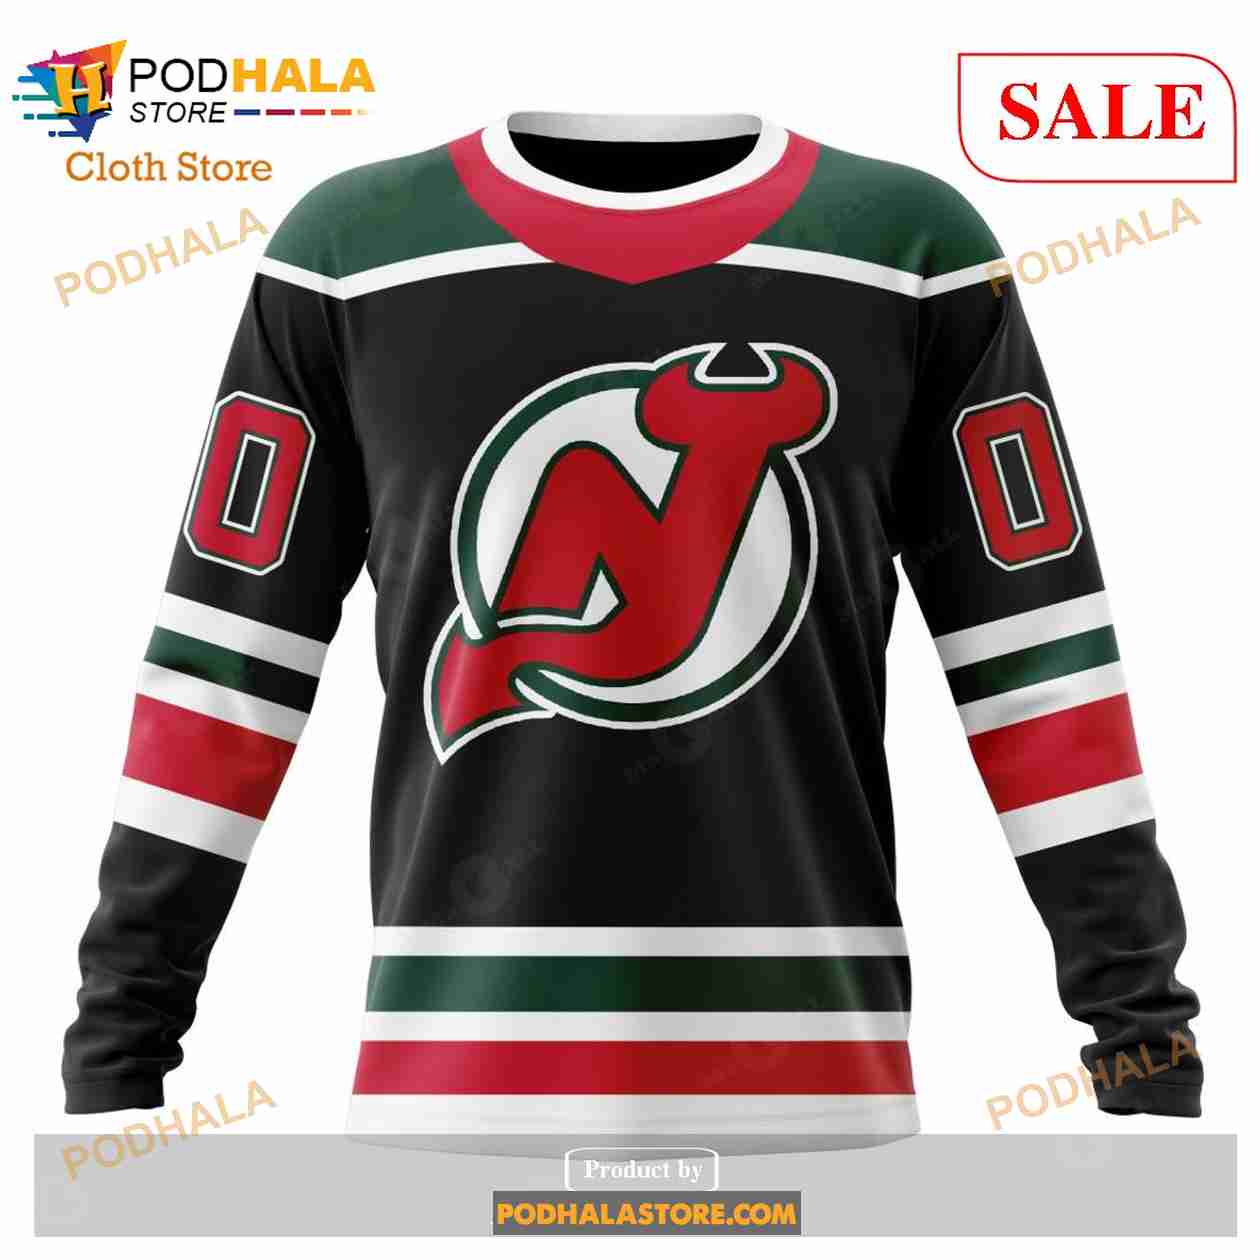 Retro Devils Hockey T-Shirt, New Jersey Devils Sweatshirt